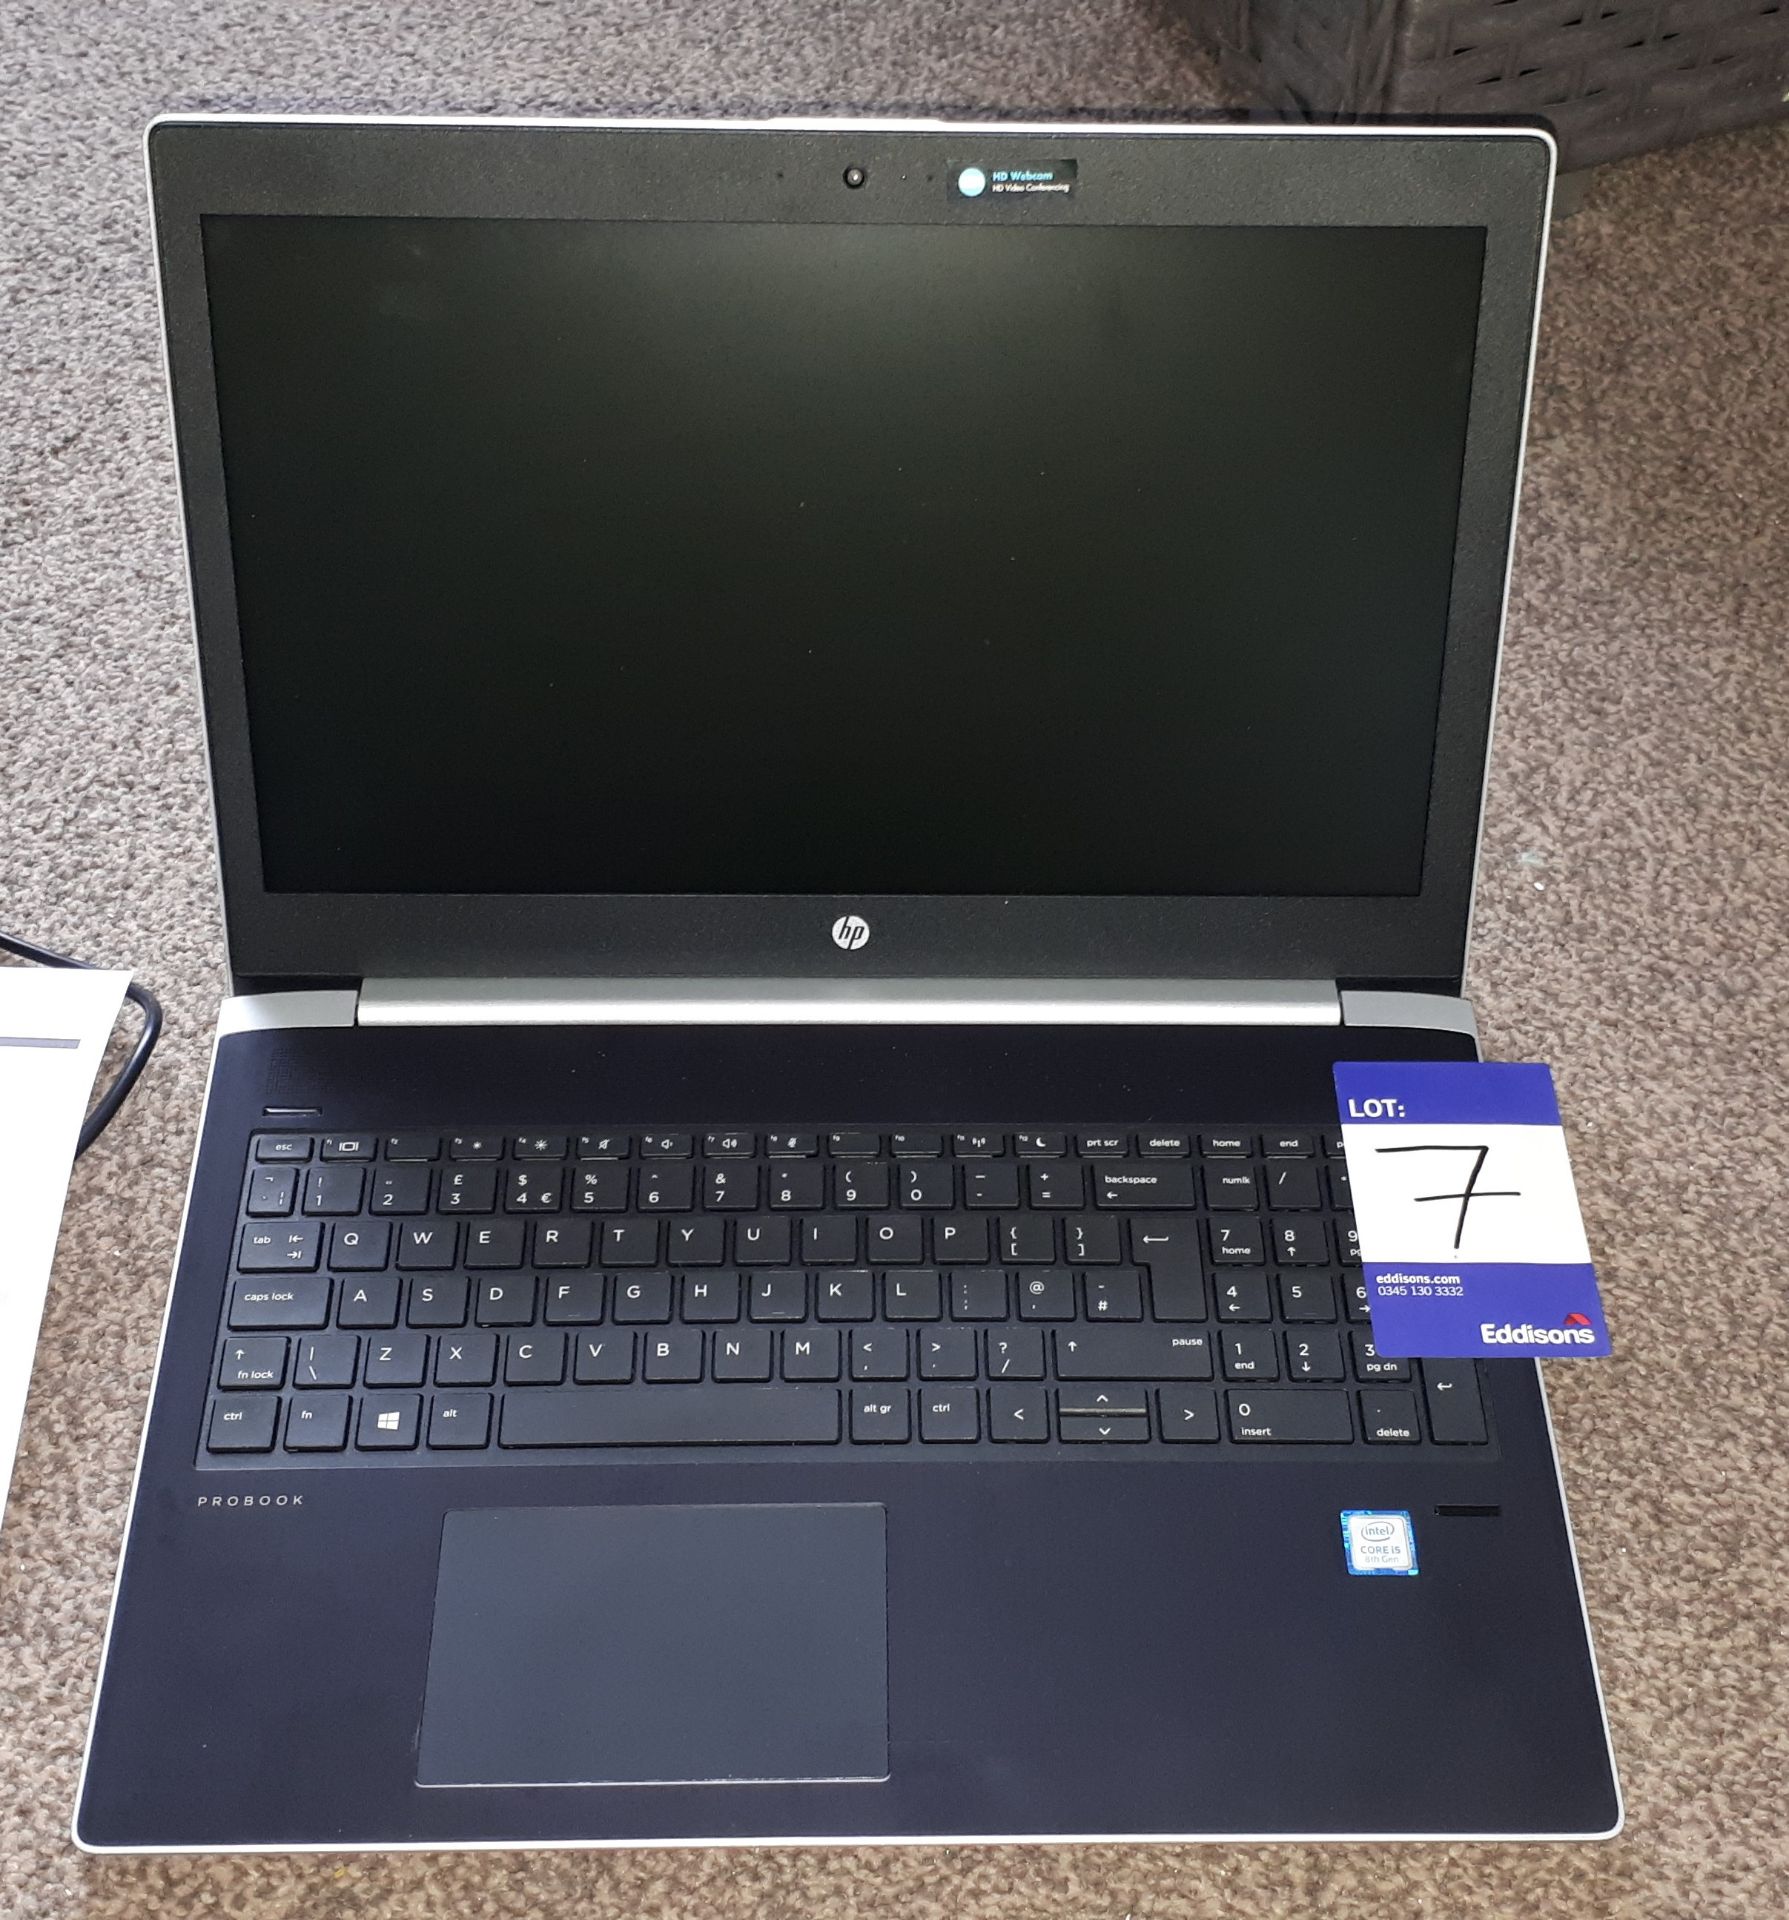 HP ProBook 450 G5 laptop, Serial Number 5CD9037HQG